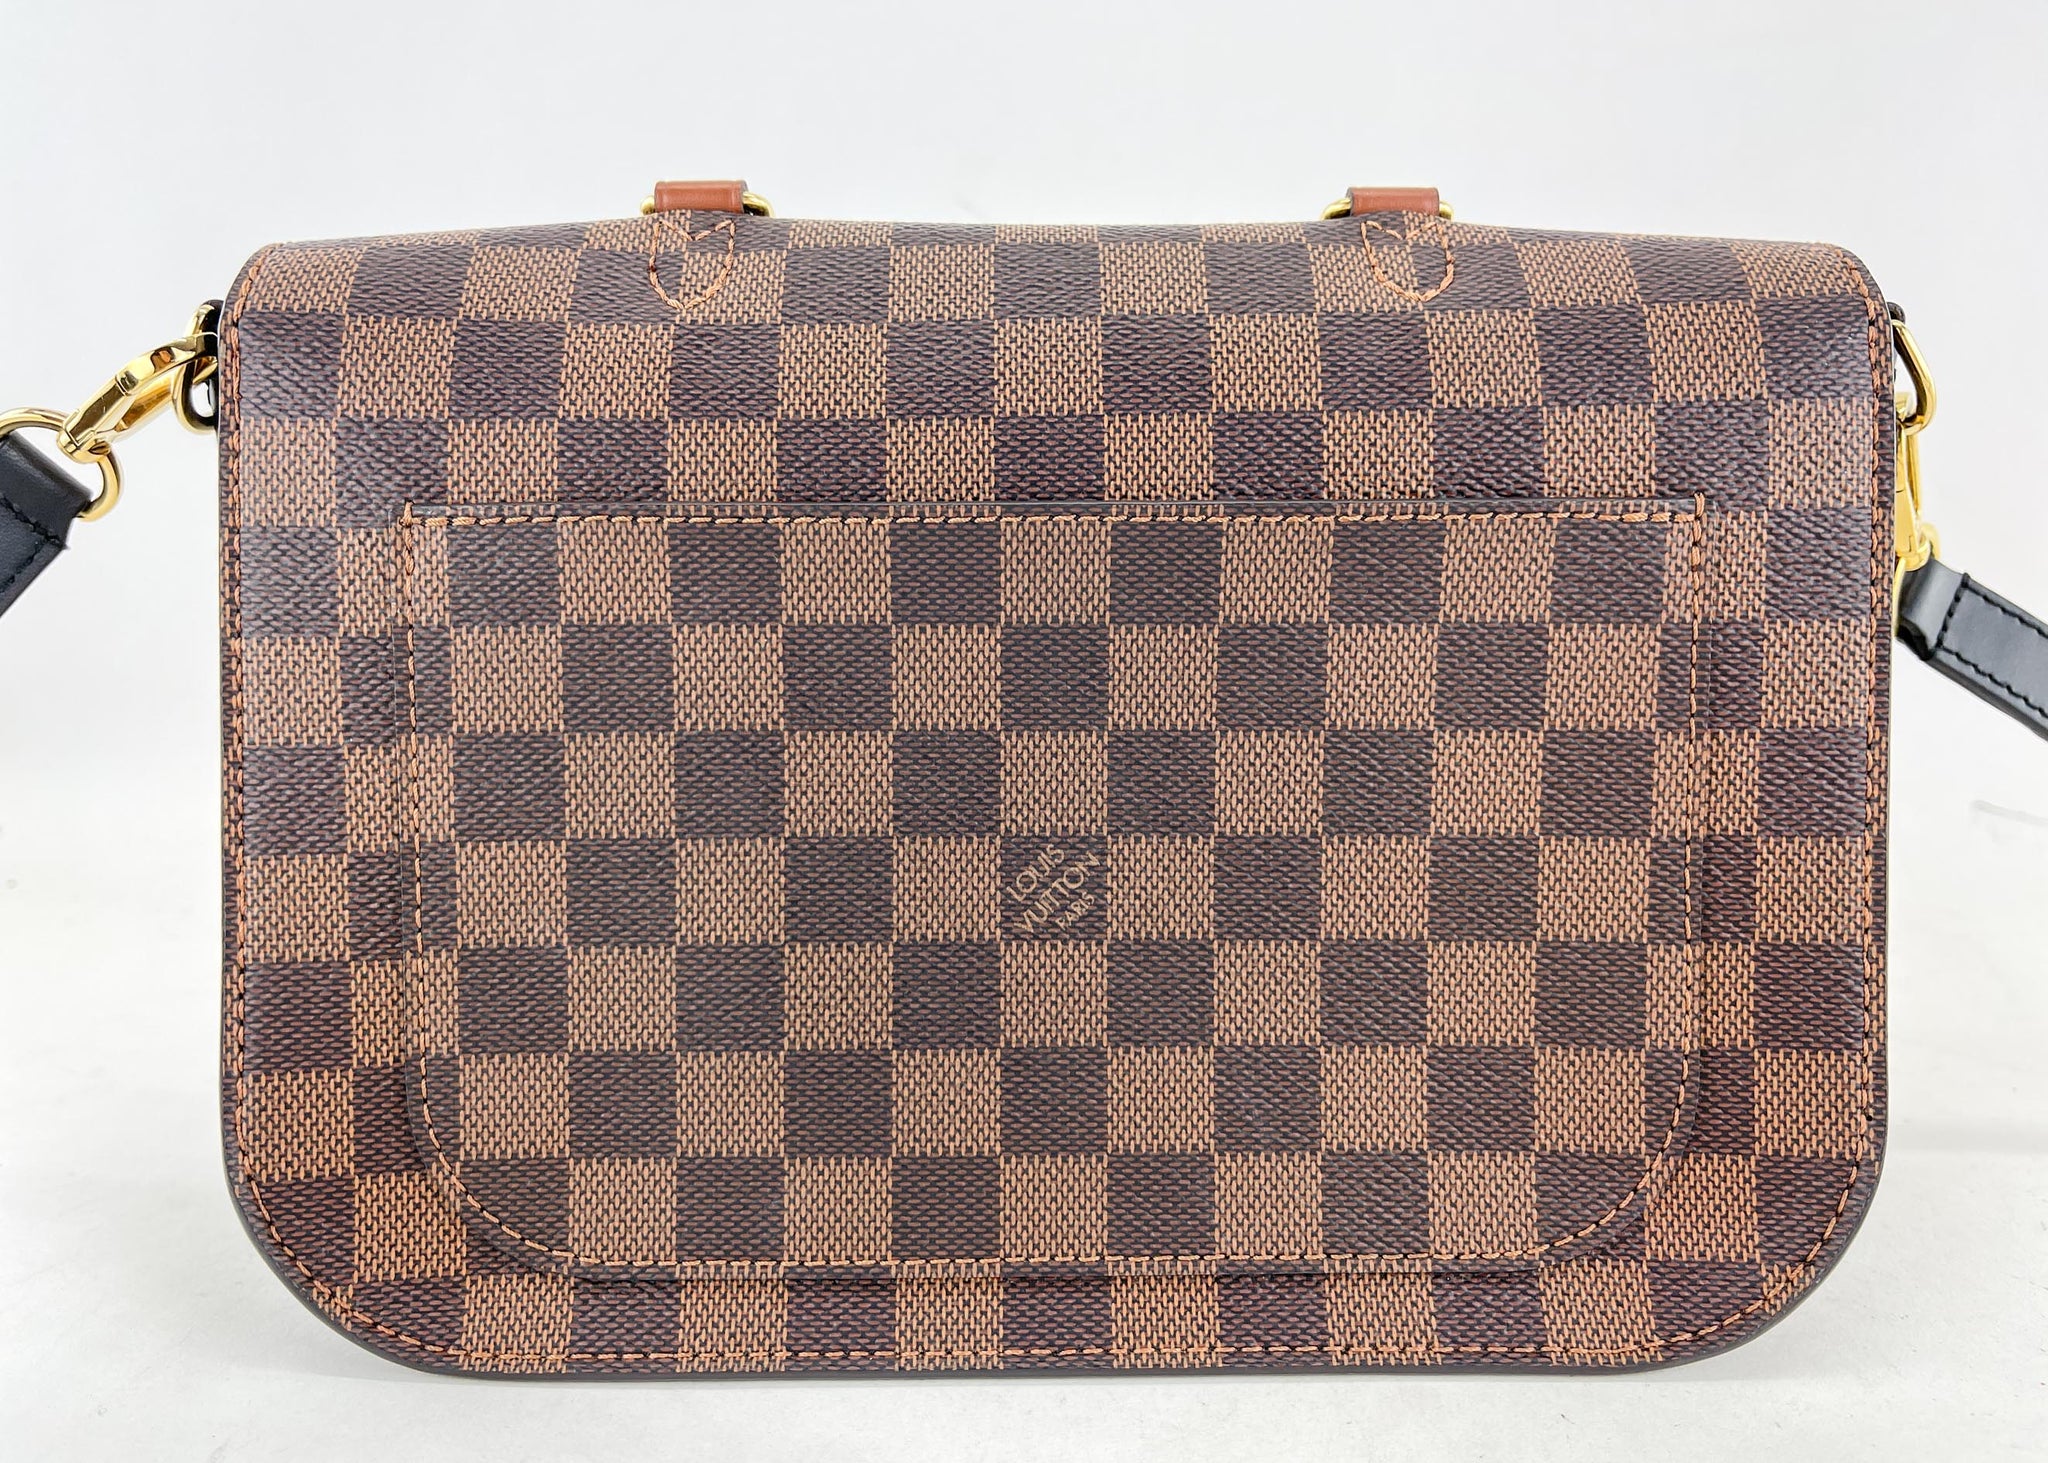 Beaumarchais bag in ebony checkered canvas